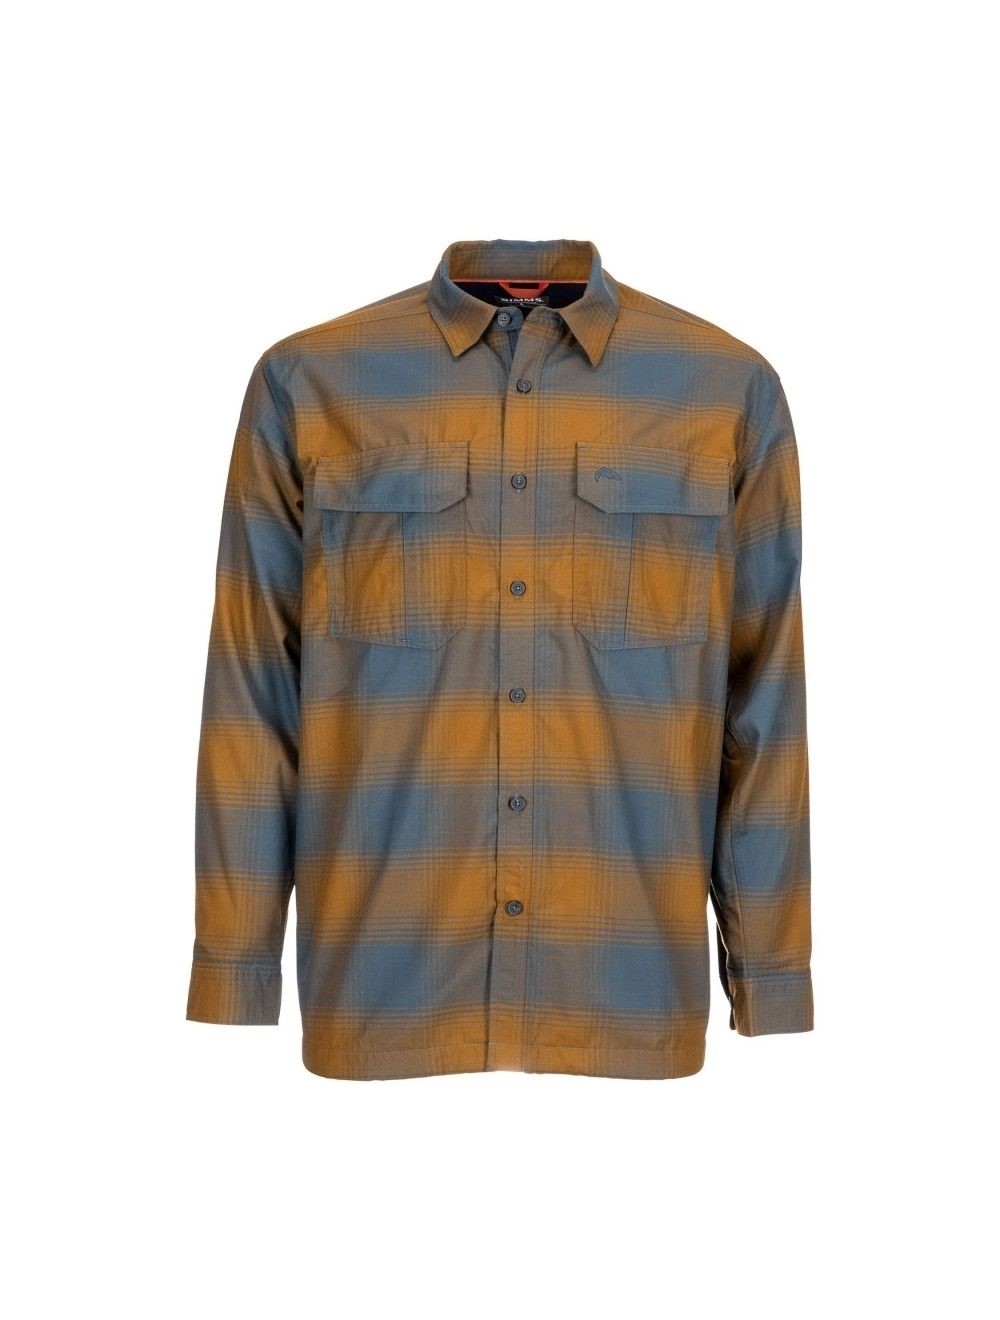 Simms M's Coldweather L/S Shirt - Dark Bronze Buffalo Plaid - XL